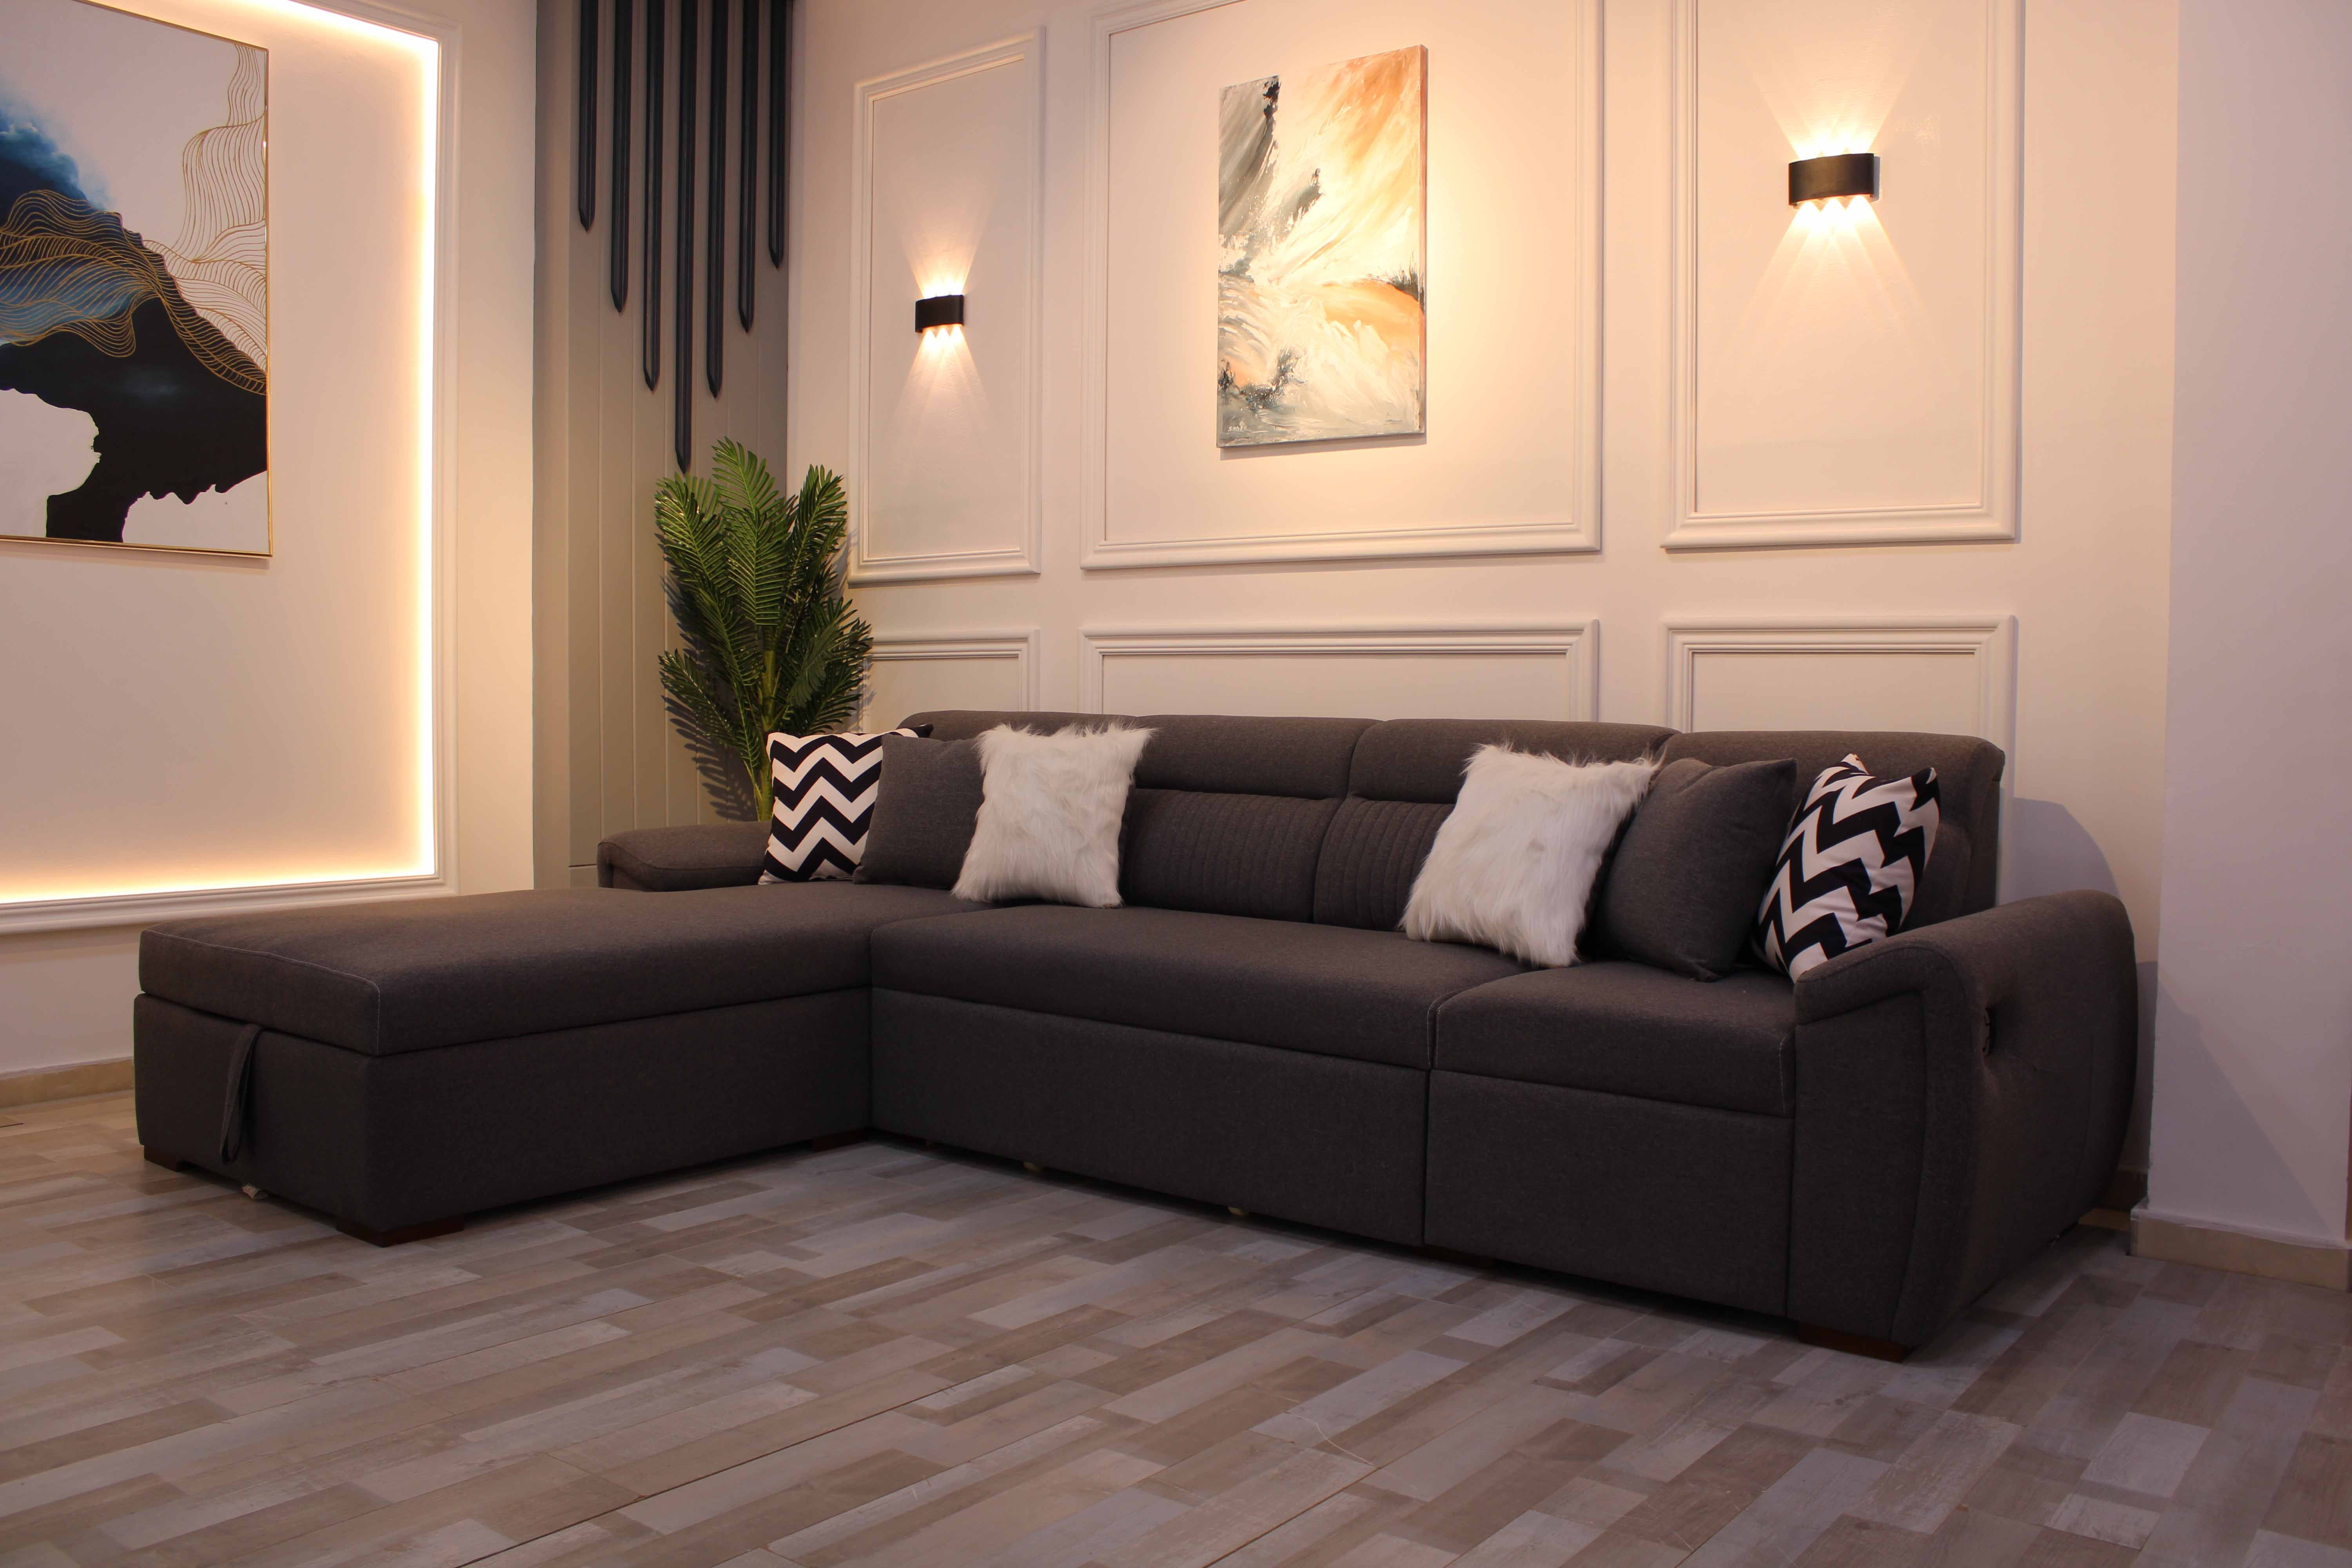 The Gray superb Living Room